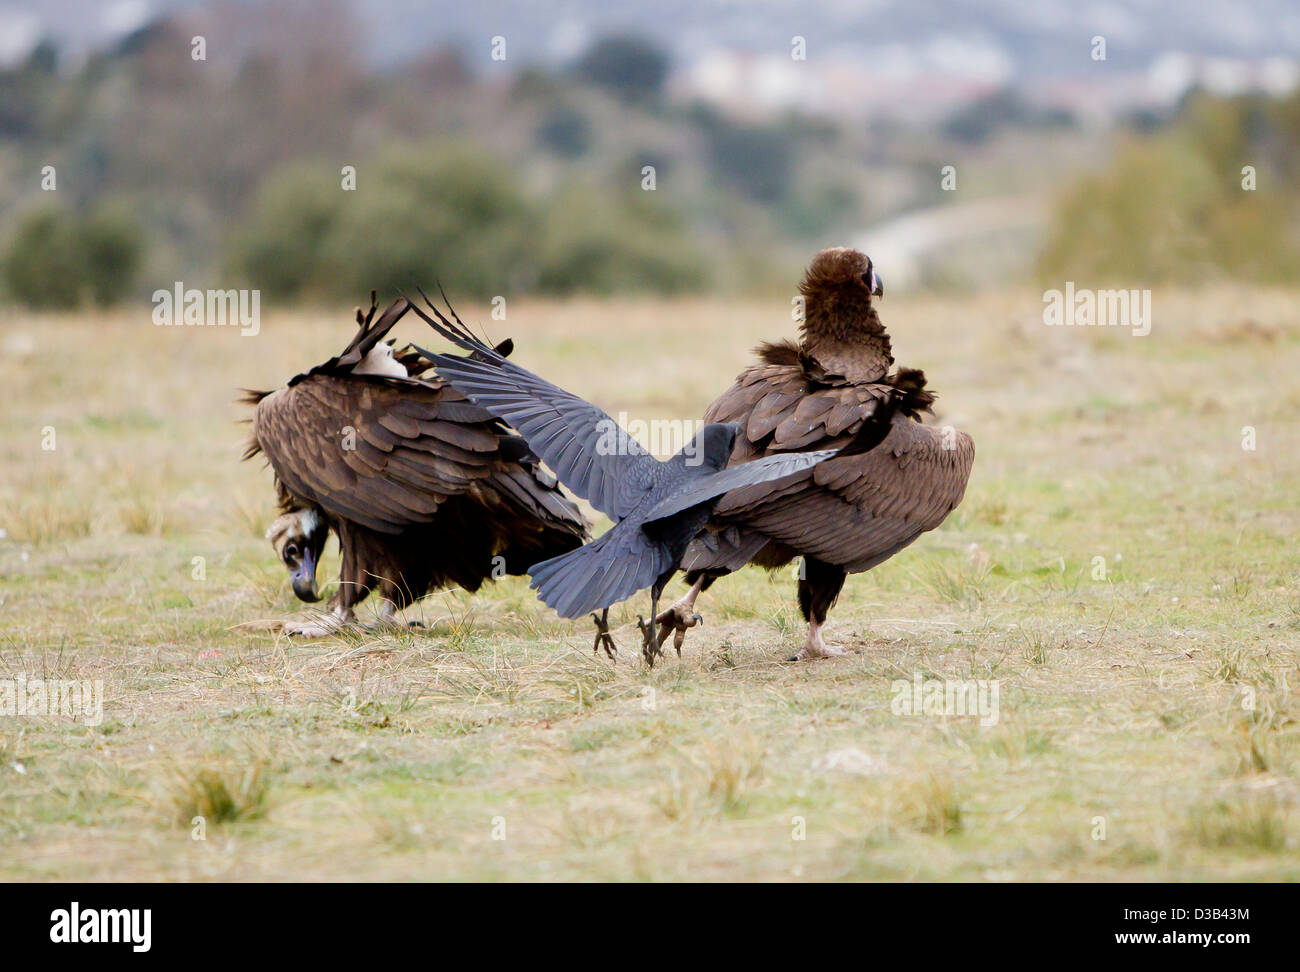 Corvo imperiale Corvus corax mobbing avvoltoio nero Coragyps atratus Spagna Foto Stock